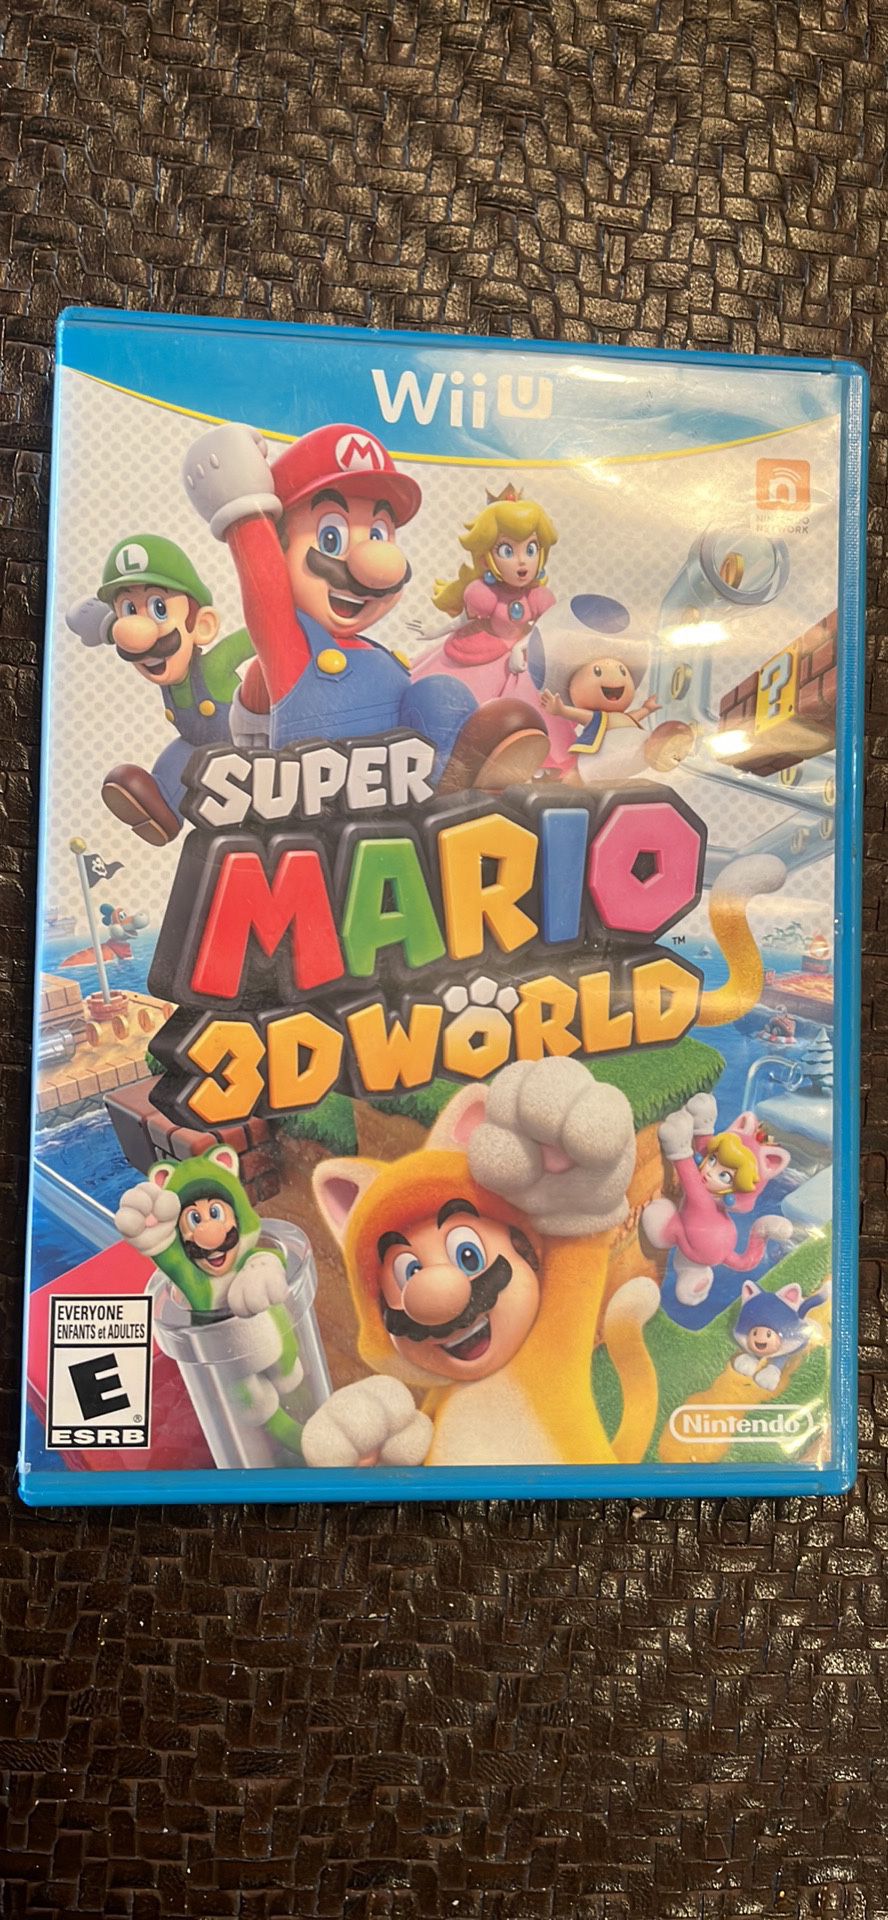 Super Mario 3D World (Nintendo Wii U, 2013) CIB Complete Tested